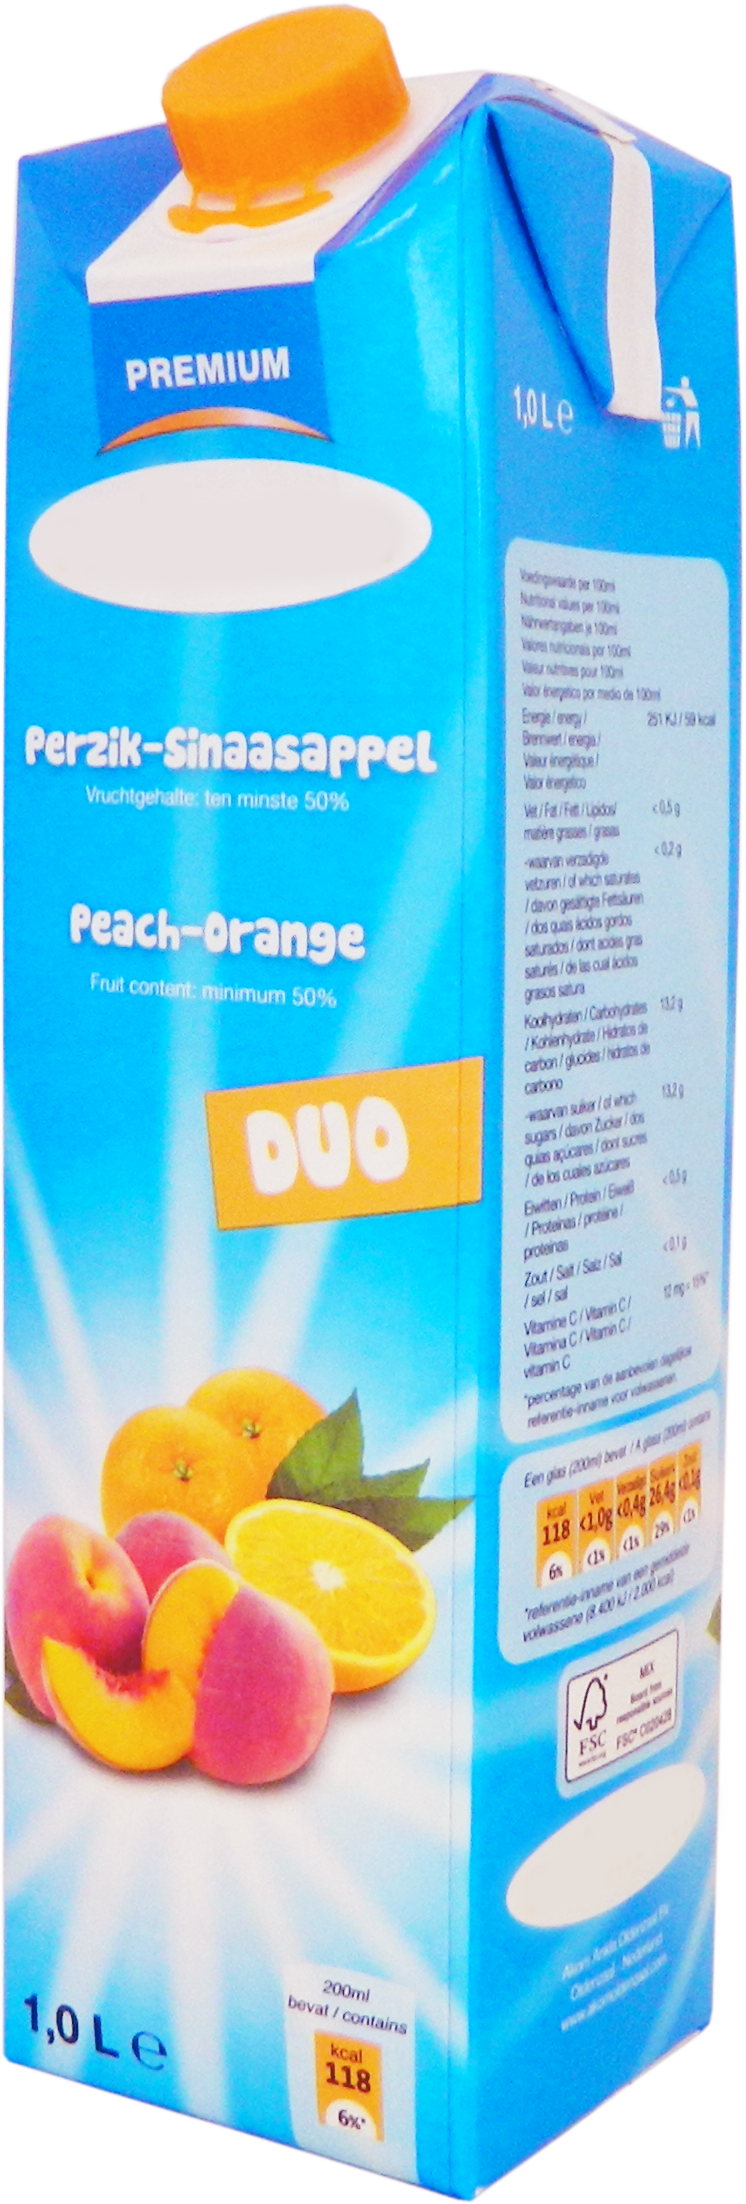 Premium Perzik-Sinaasappelsap 1,0 liter